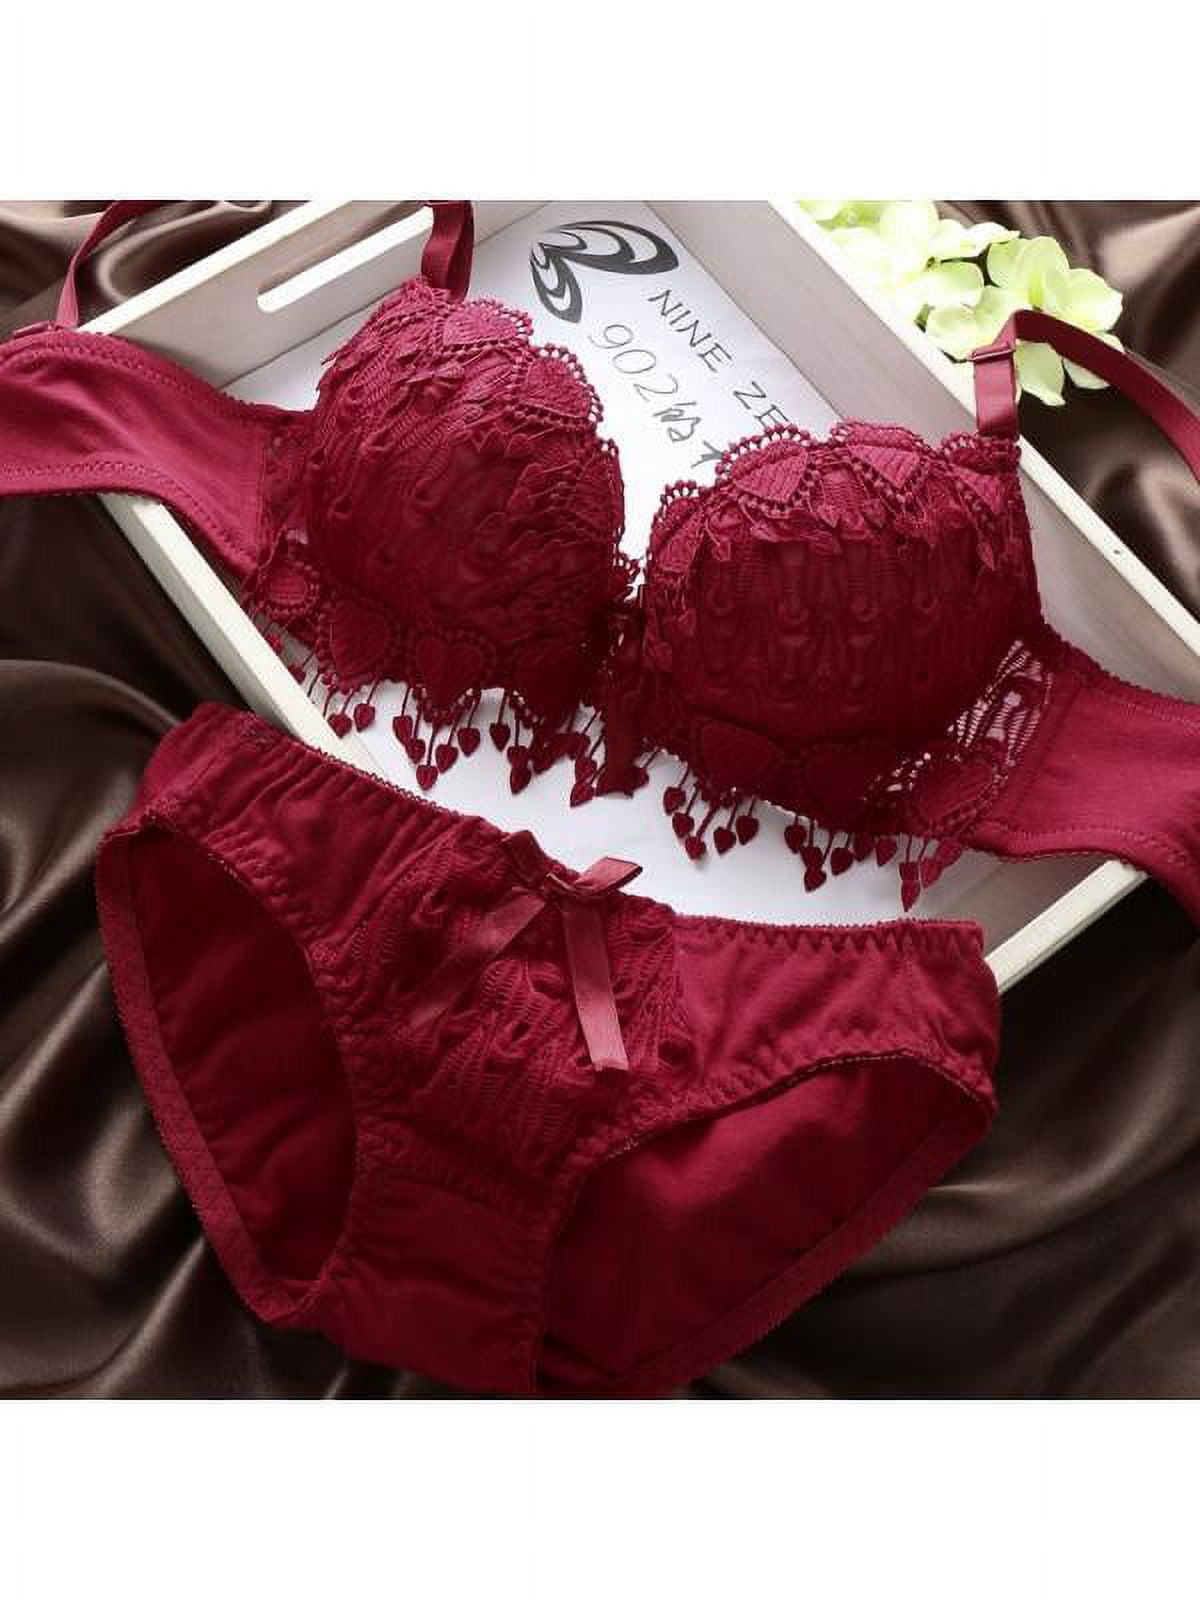 Topumt Women Underwear Suit Lady’s Push Up Bra Sets Lace Love Heart  Embroidery Deep V Lingerie Bras +Panties